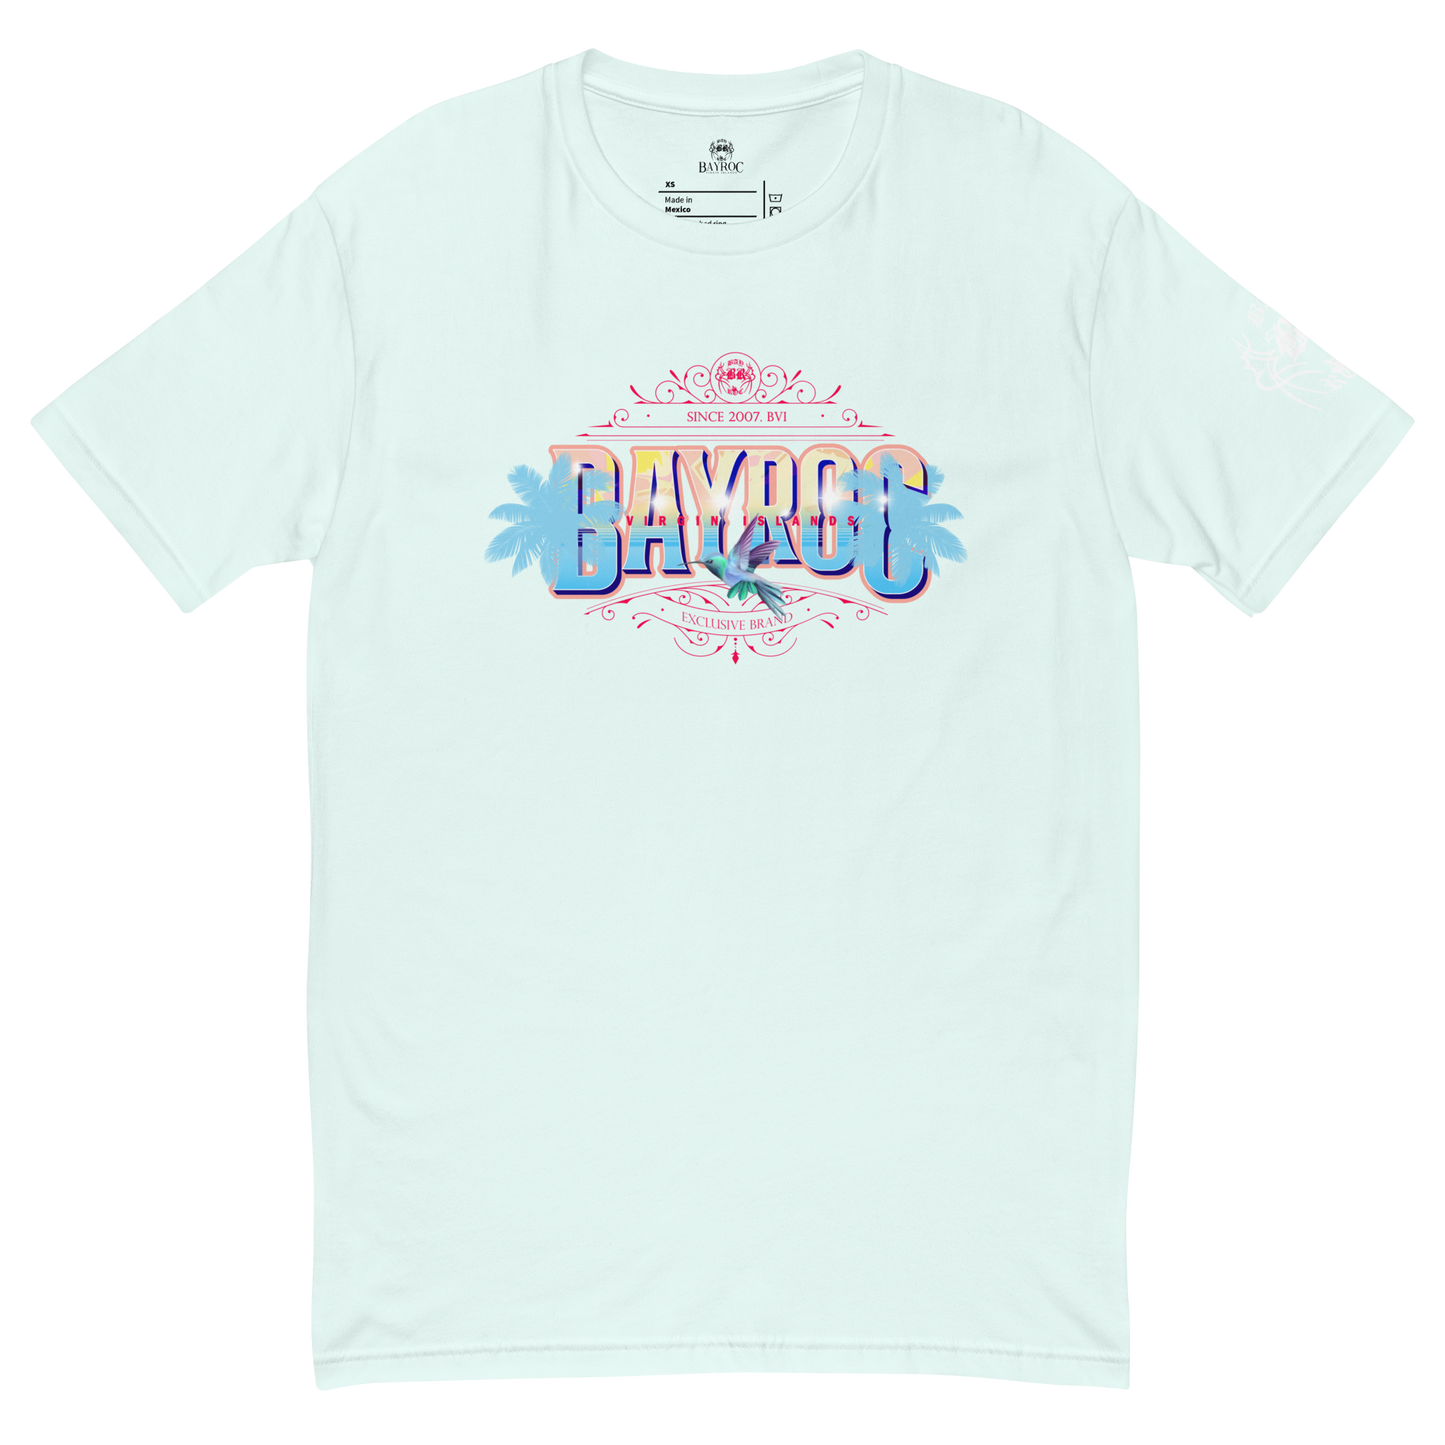 Hummingbird 2 T-shirt